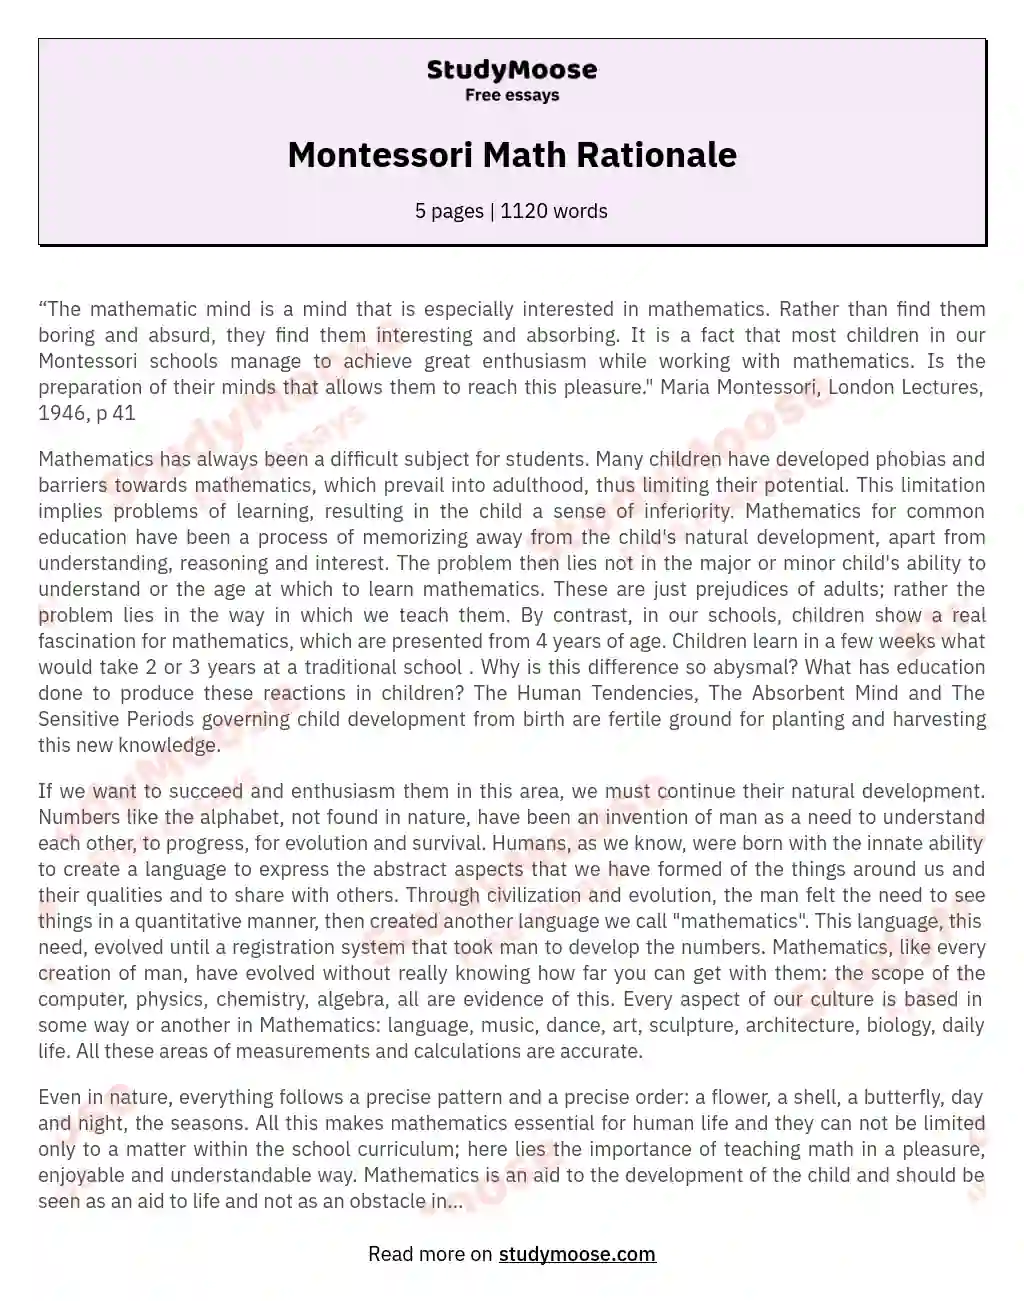 Montessori Math Rationale essay